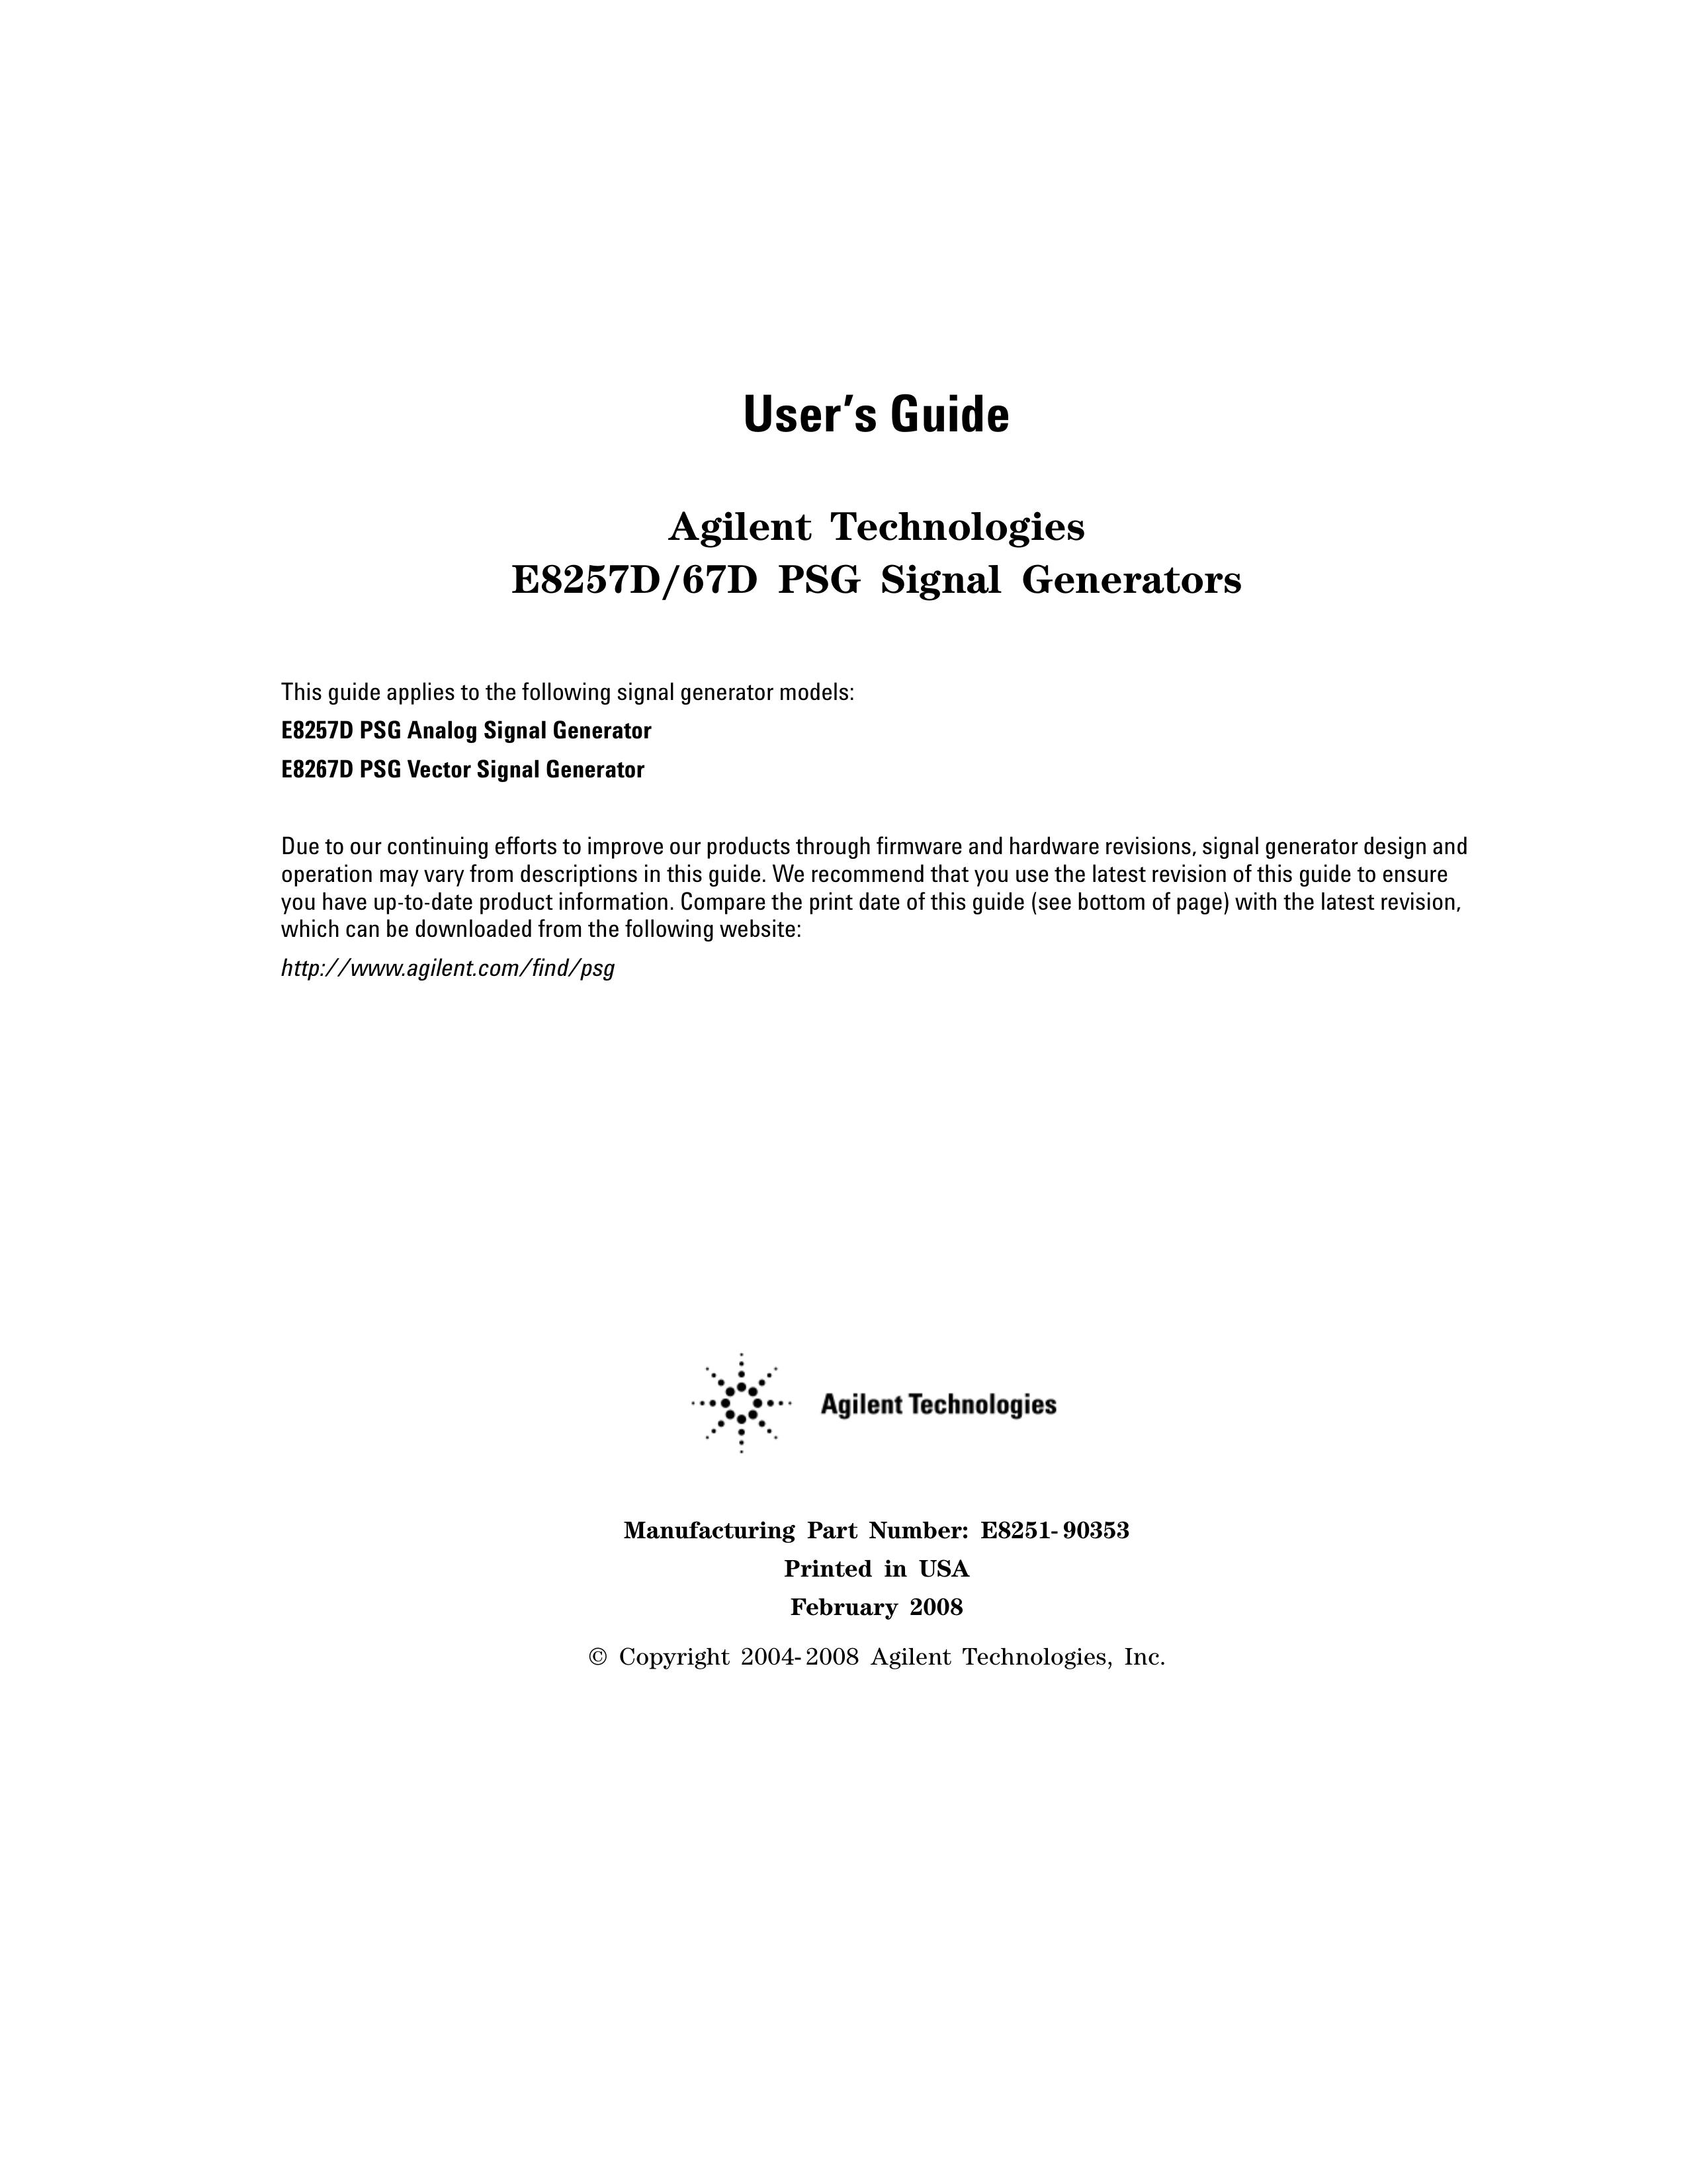 Agilent Technologies E8267D PSG Portable Generator User Manual